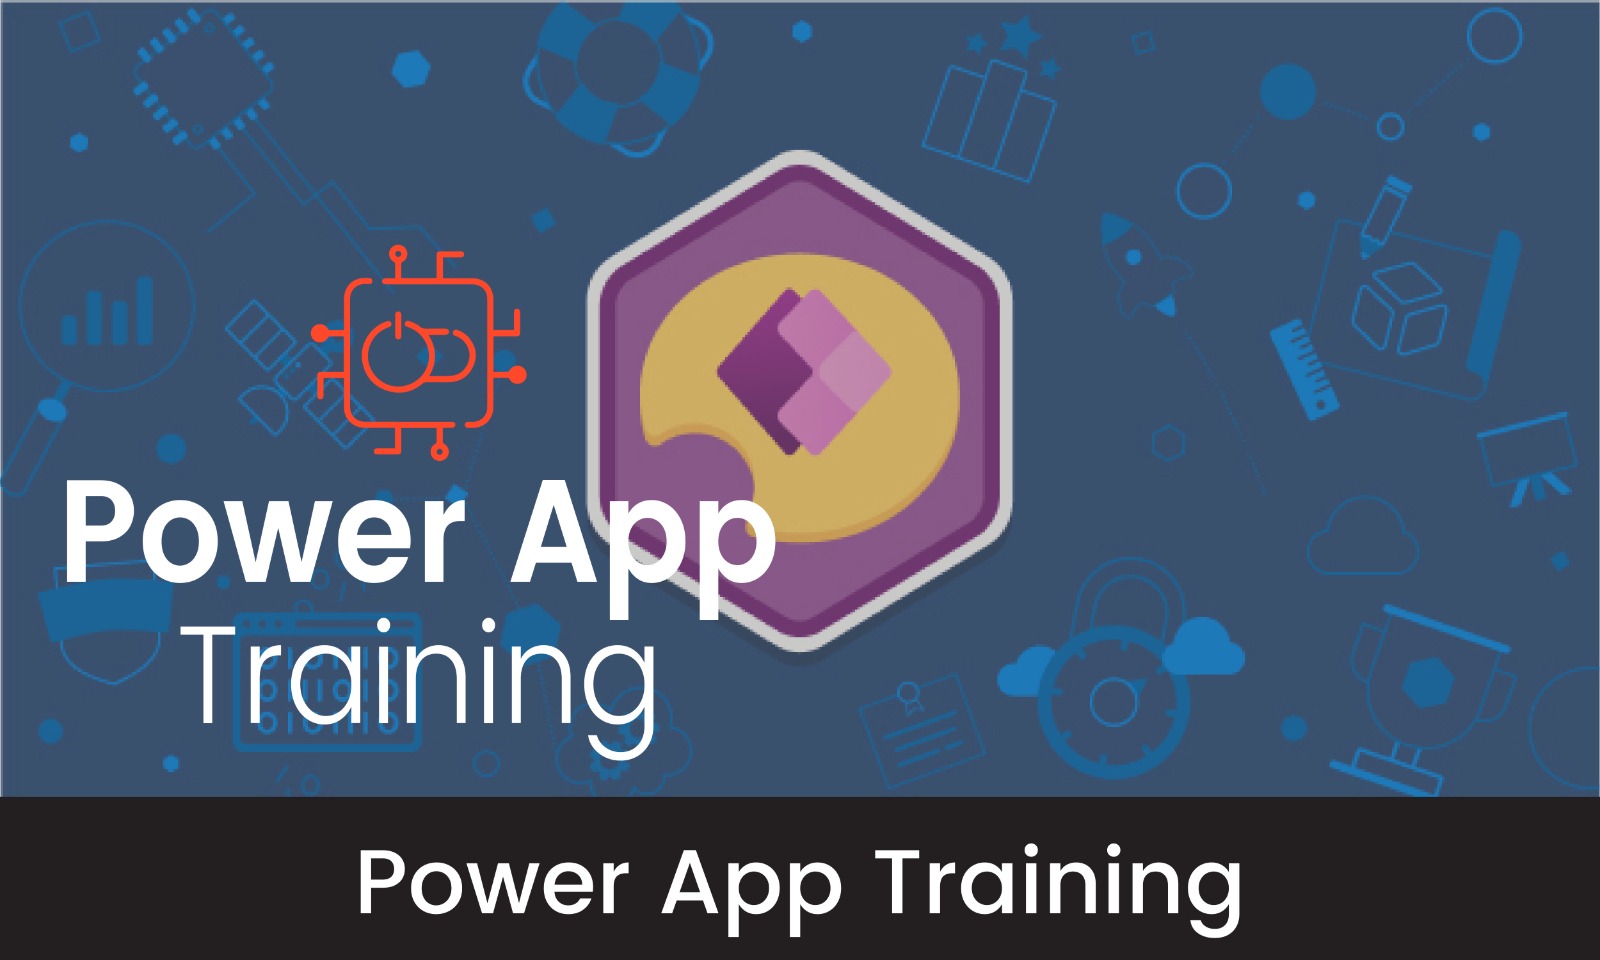 Power Apps